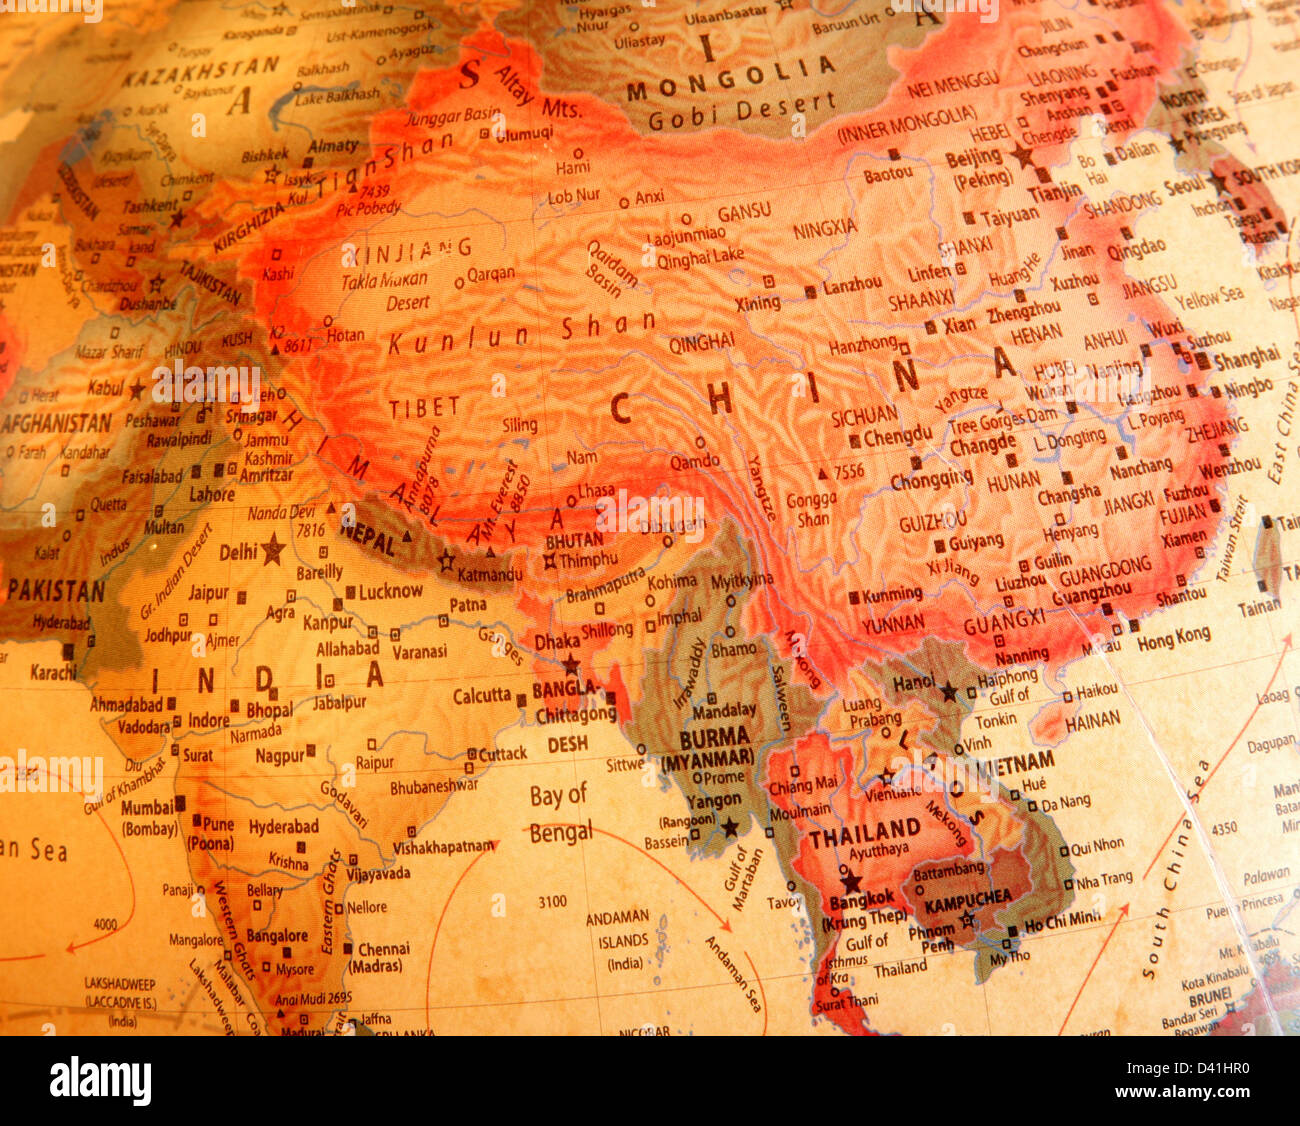 India, China, Thailand on the globe Stock Photo